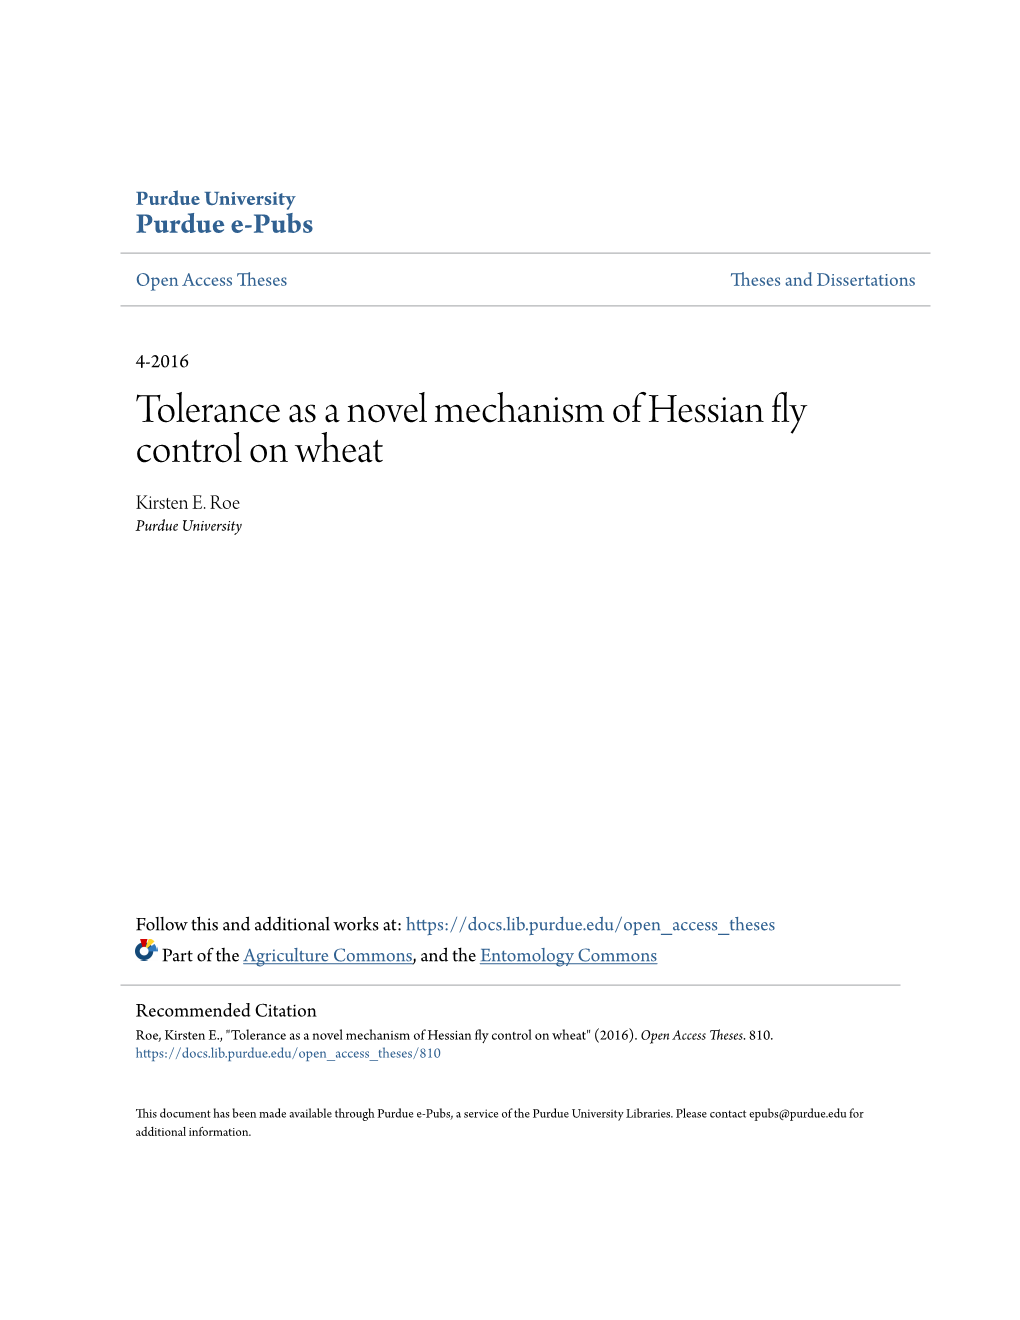 Tolerance As a Novel Mechanism of Hessian Fly Control on Wheat Kirsten E